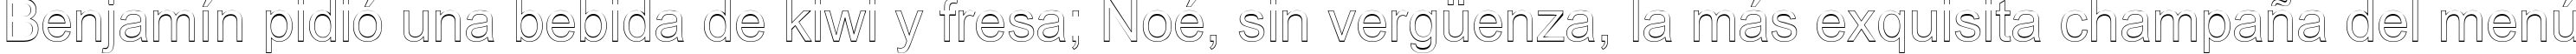 Пример написания шрифтом Arialic Hollow текста на испанском